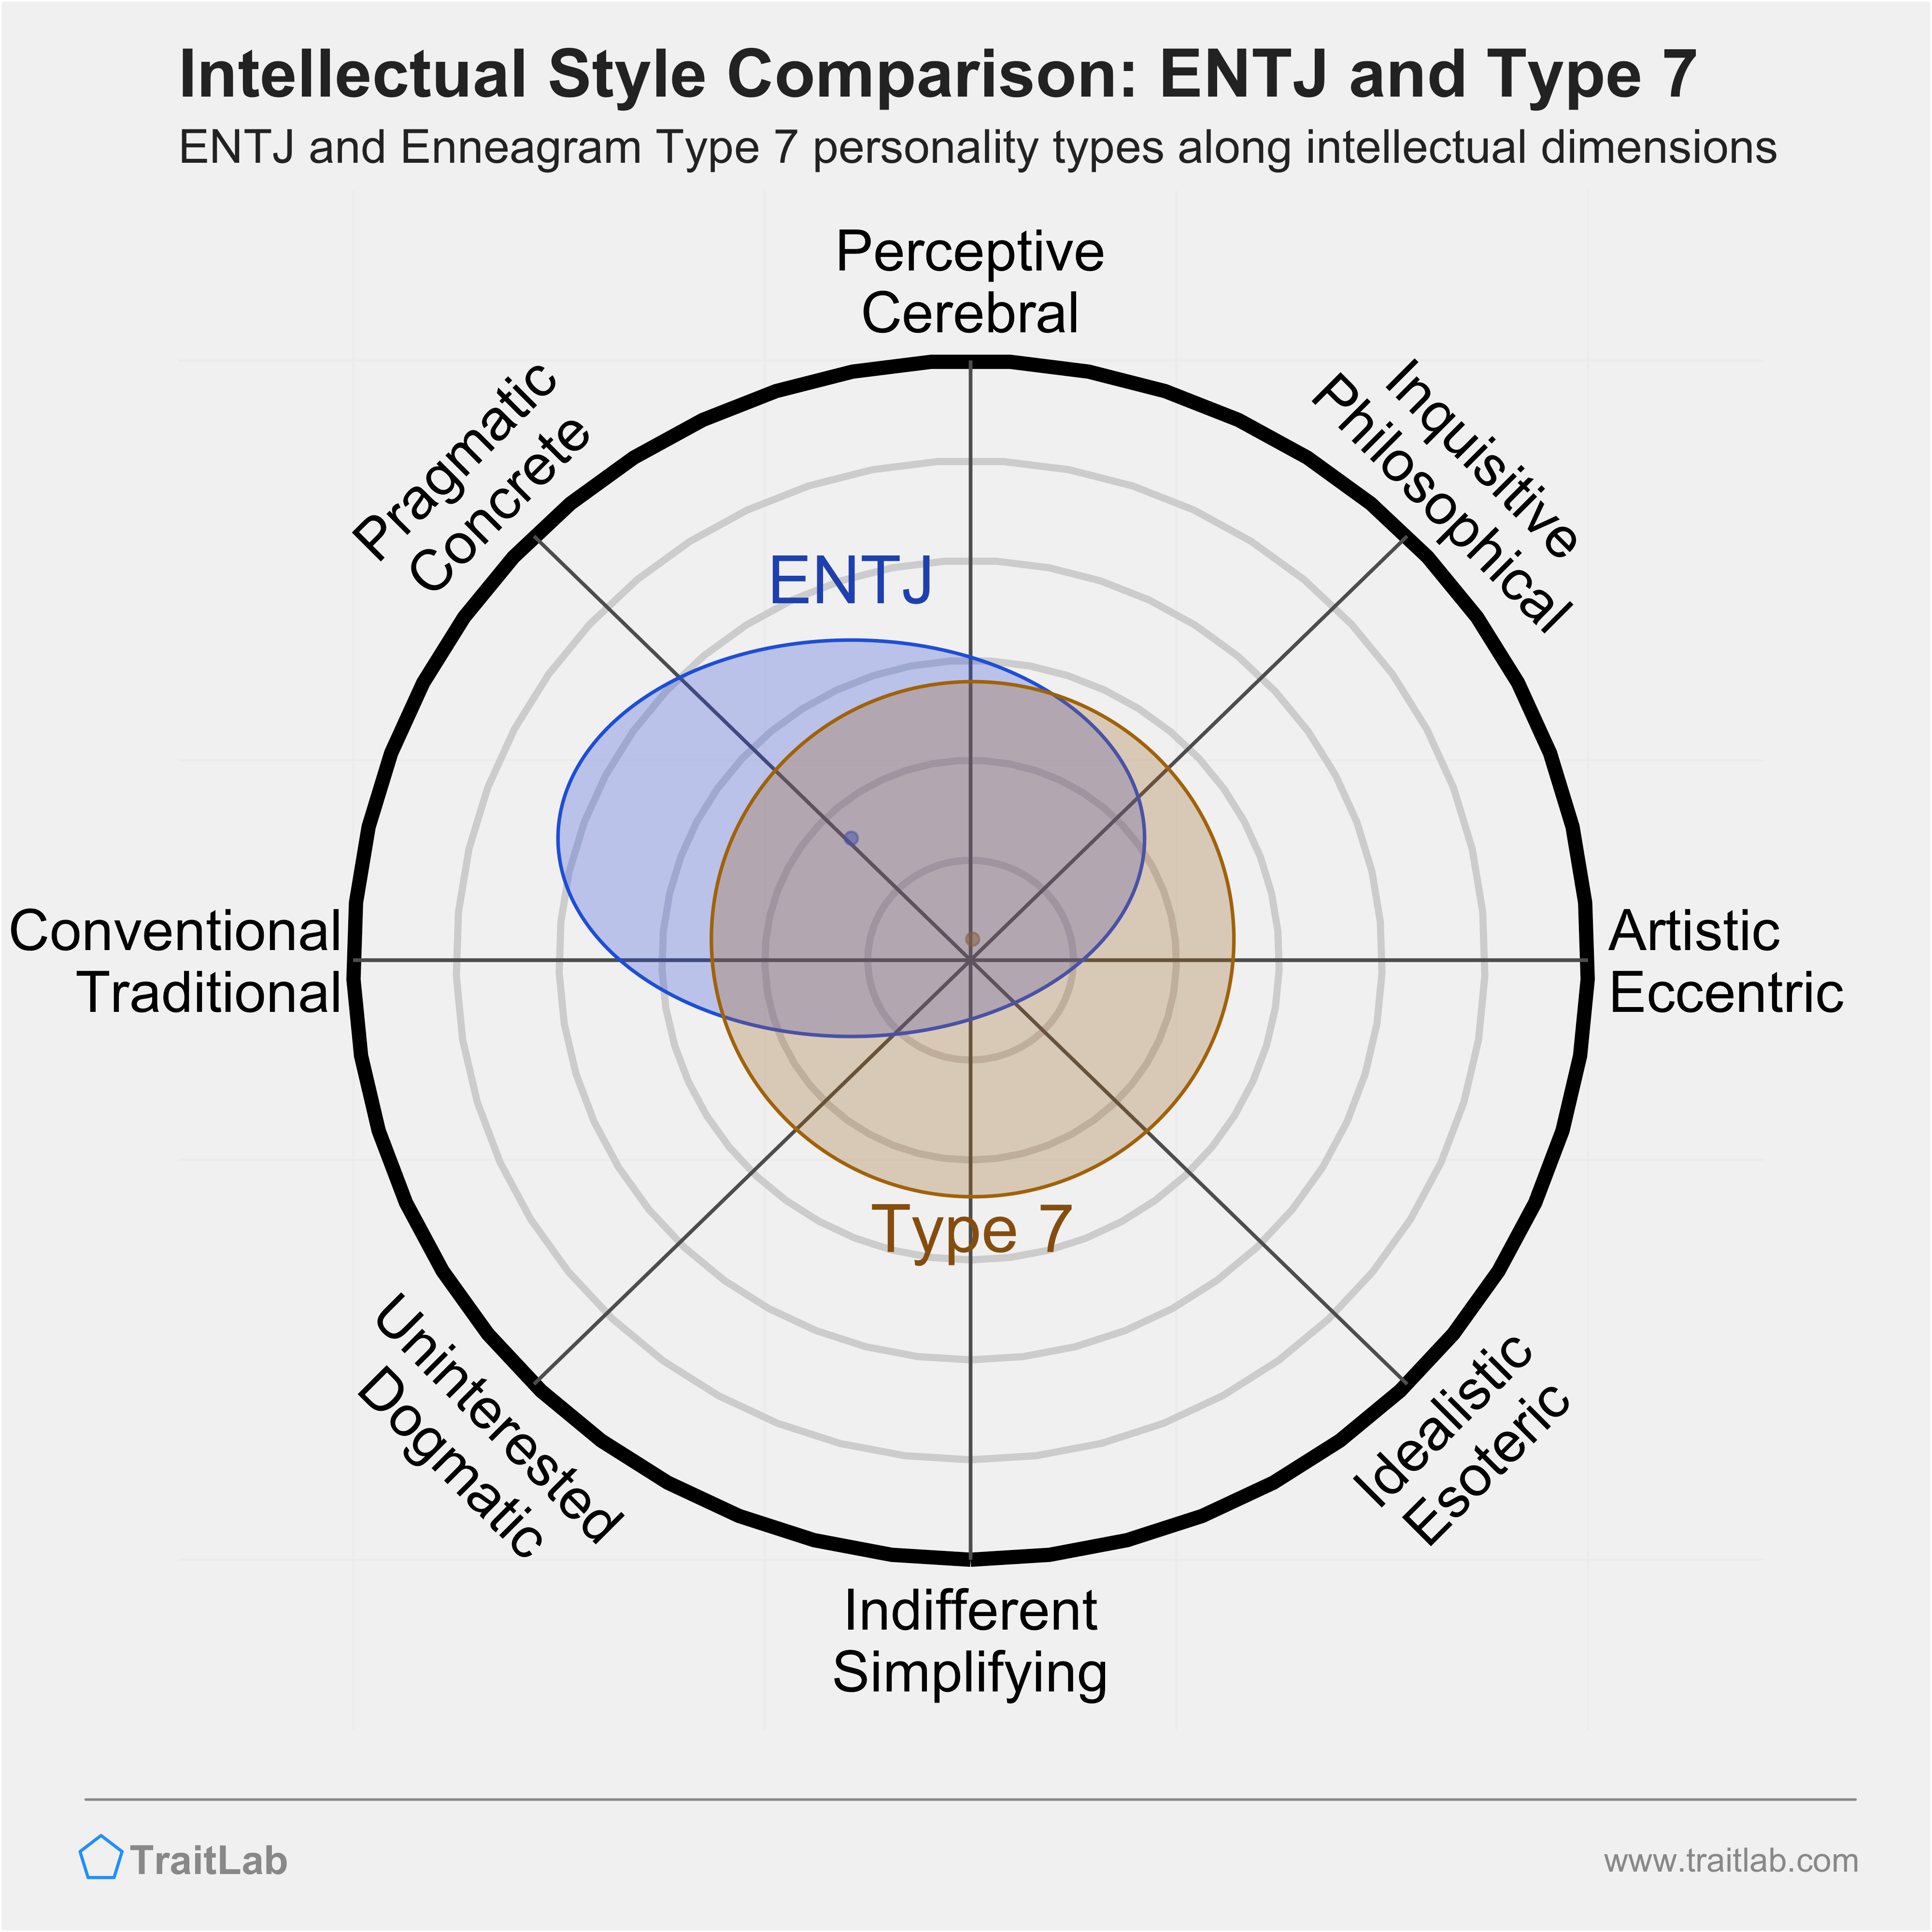 ENTJ and Type 7 comparison across intellectual dimensions